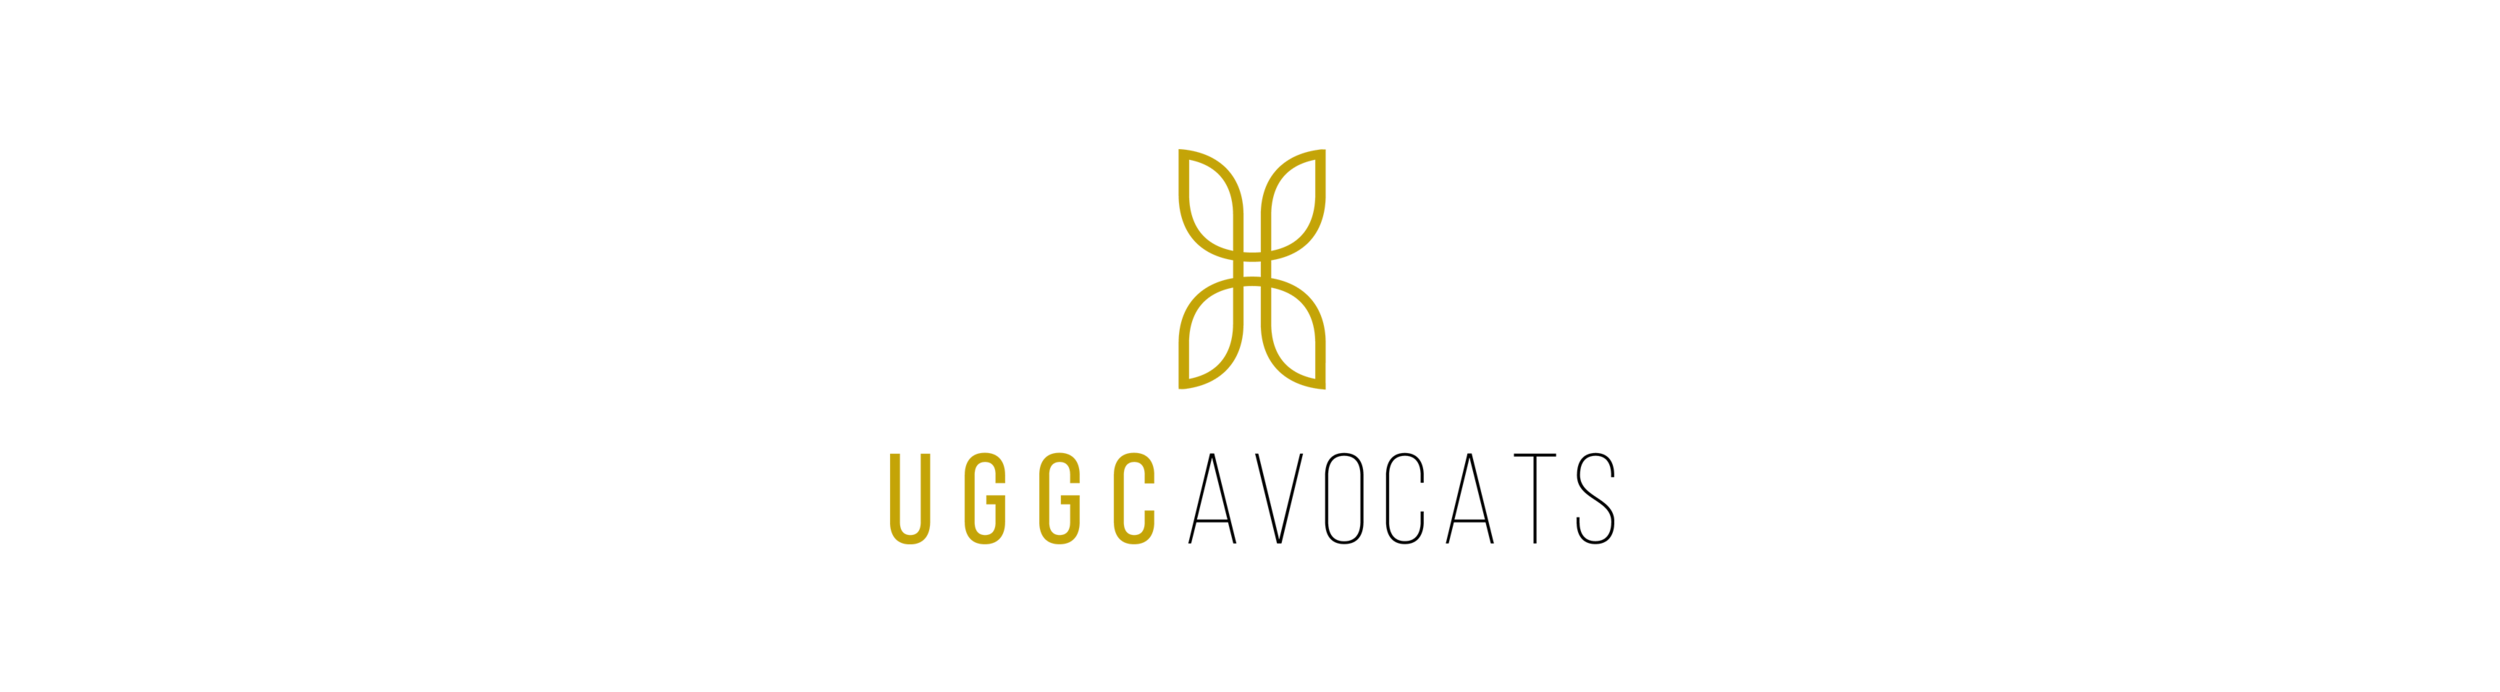 UGGC new bandeau.png